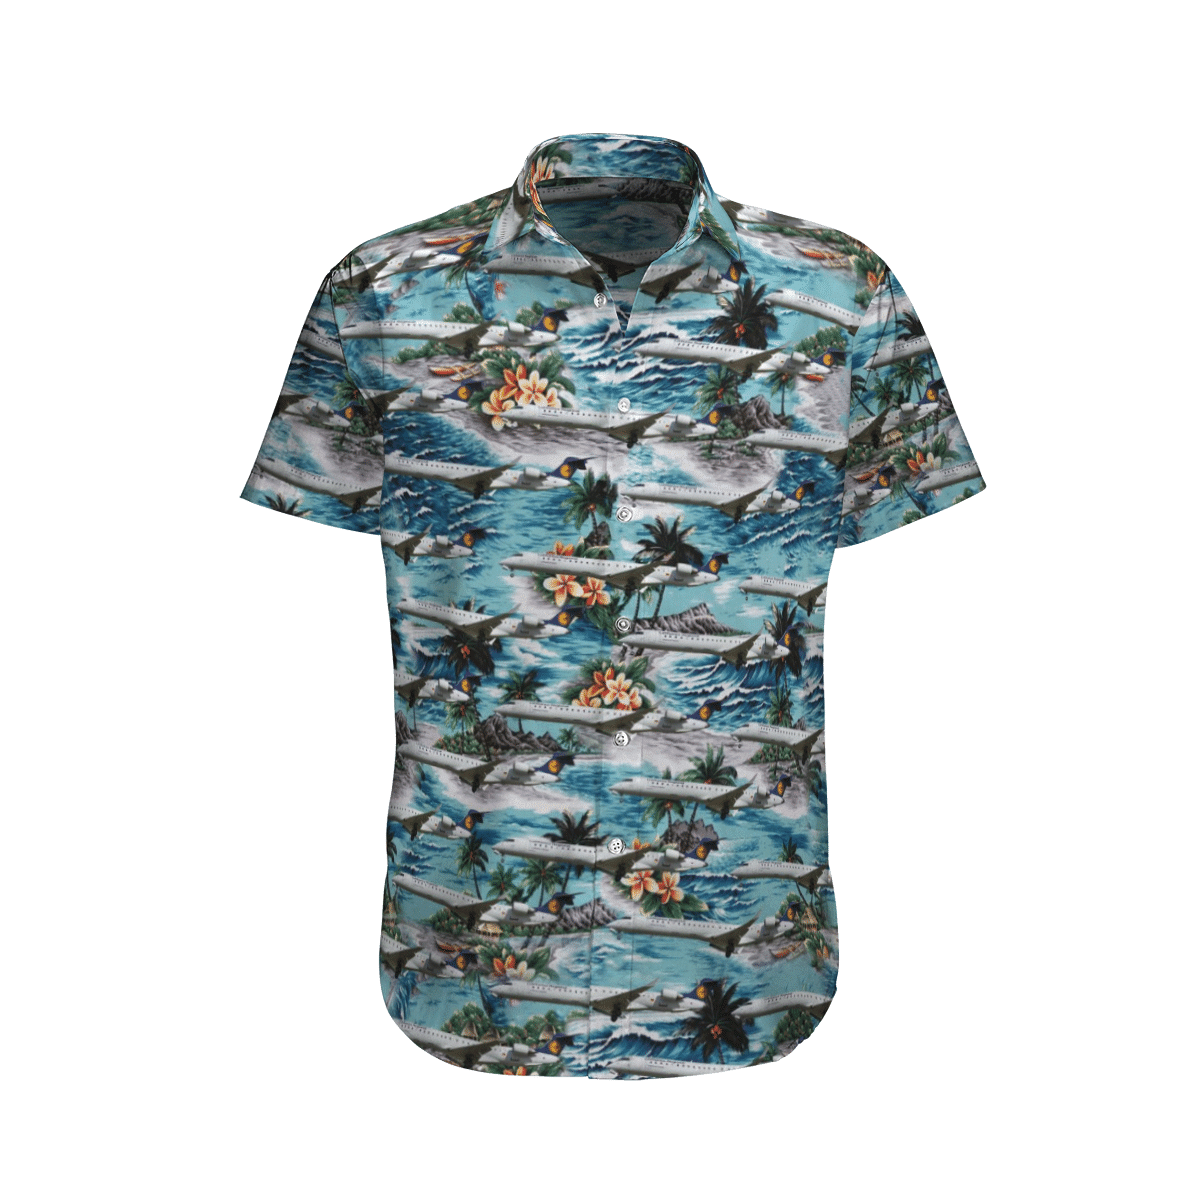 Get a new Hawaiian shirt to enjoy summer vacation 67